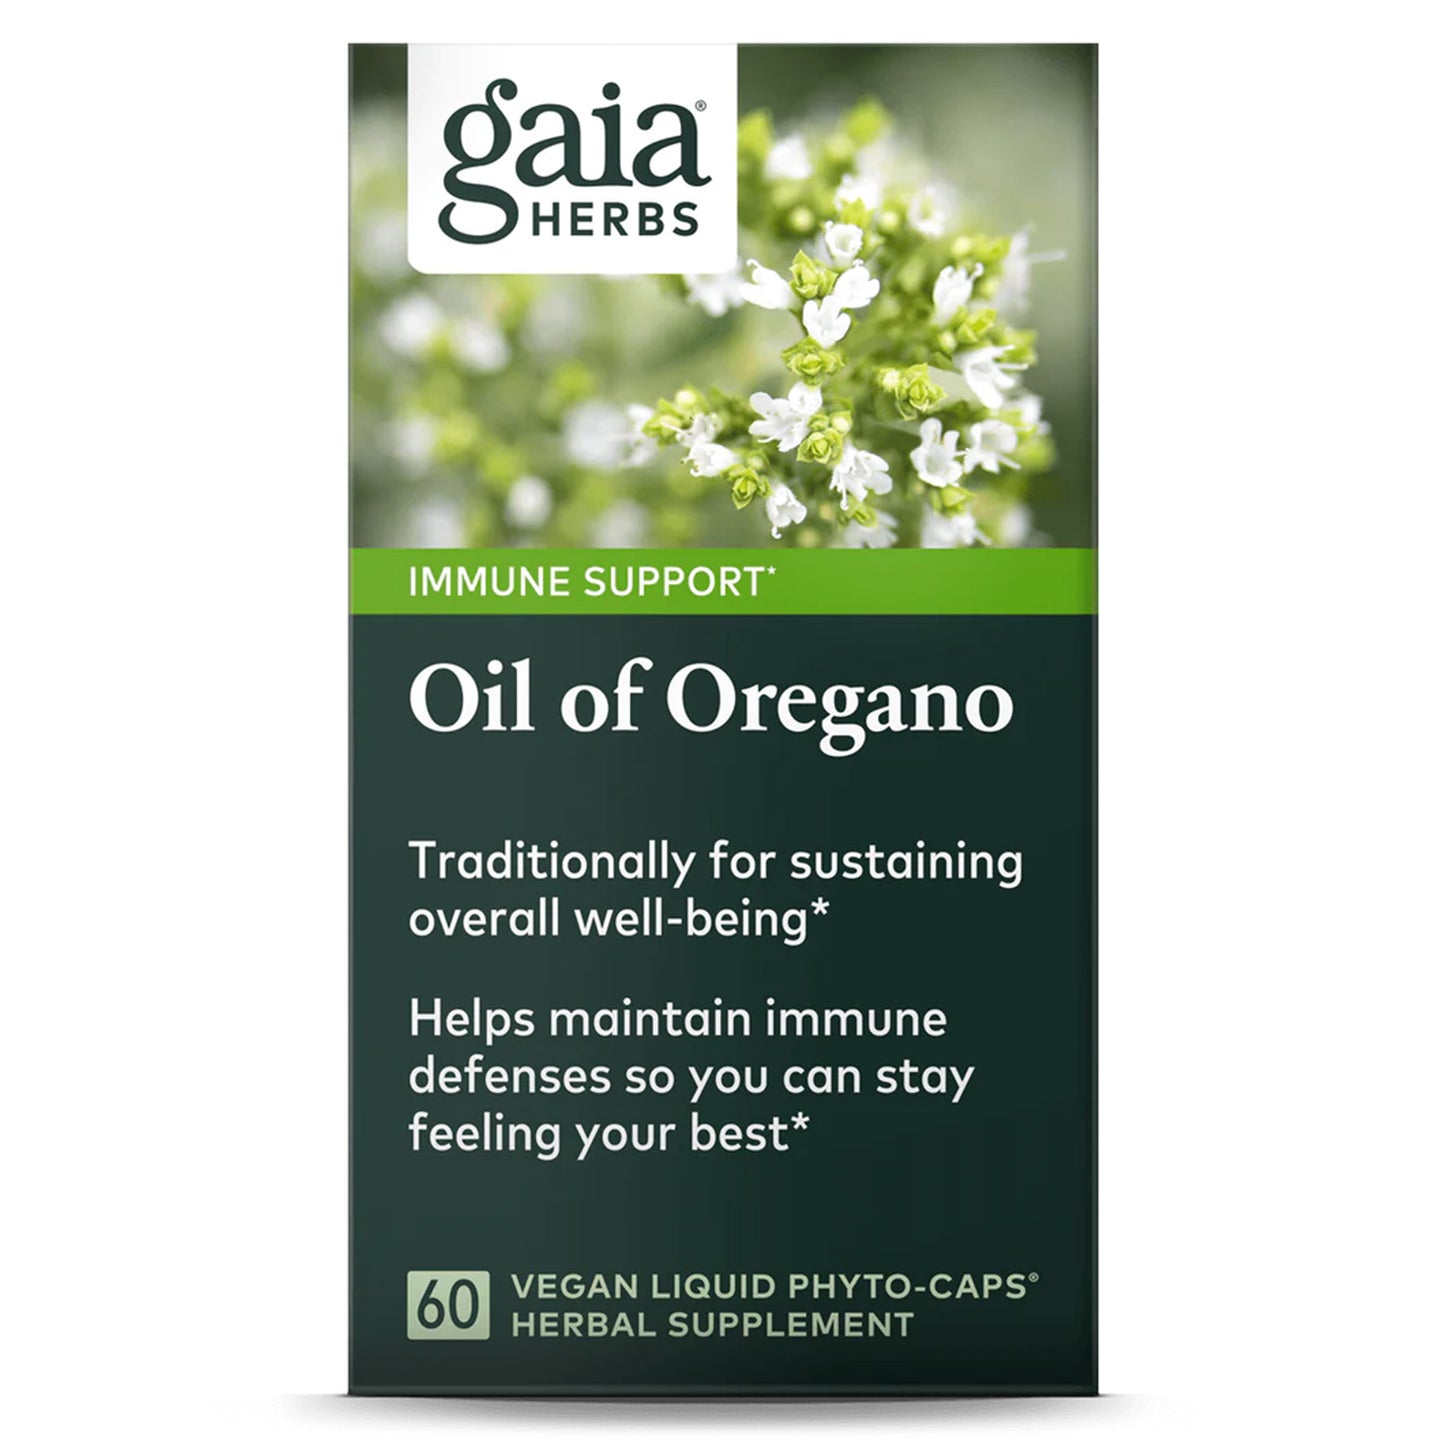 Gaia Herbs Oil of Oregano: Poder Herbal para tu Bienestar | ProHealth Shop [Panamá]